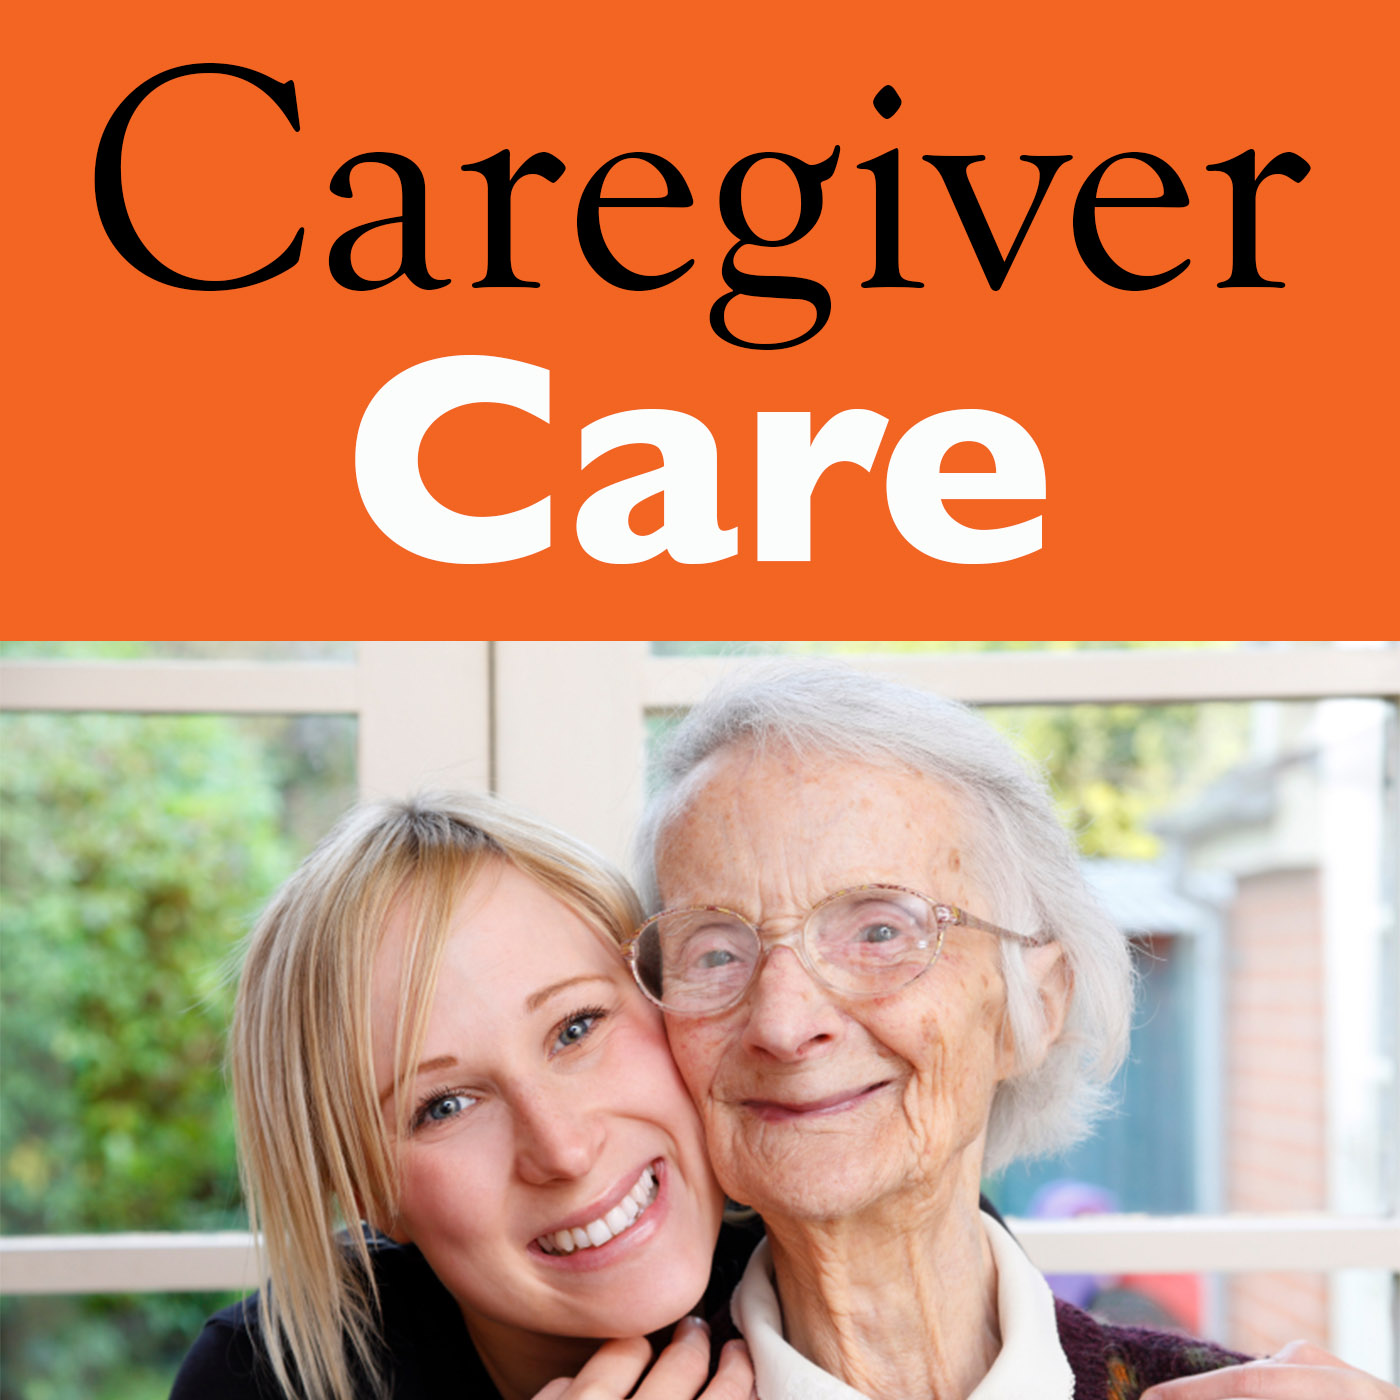 Caregiver Care - Dehydration in seniors